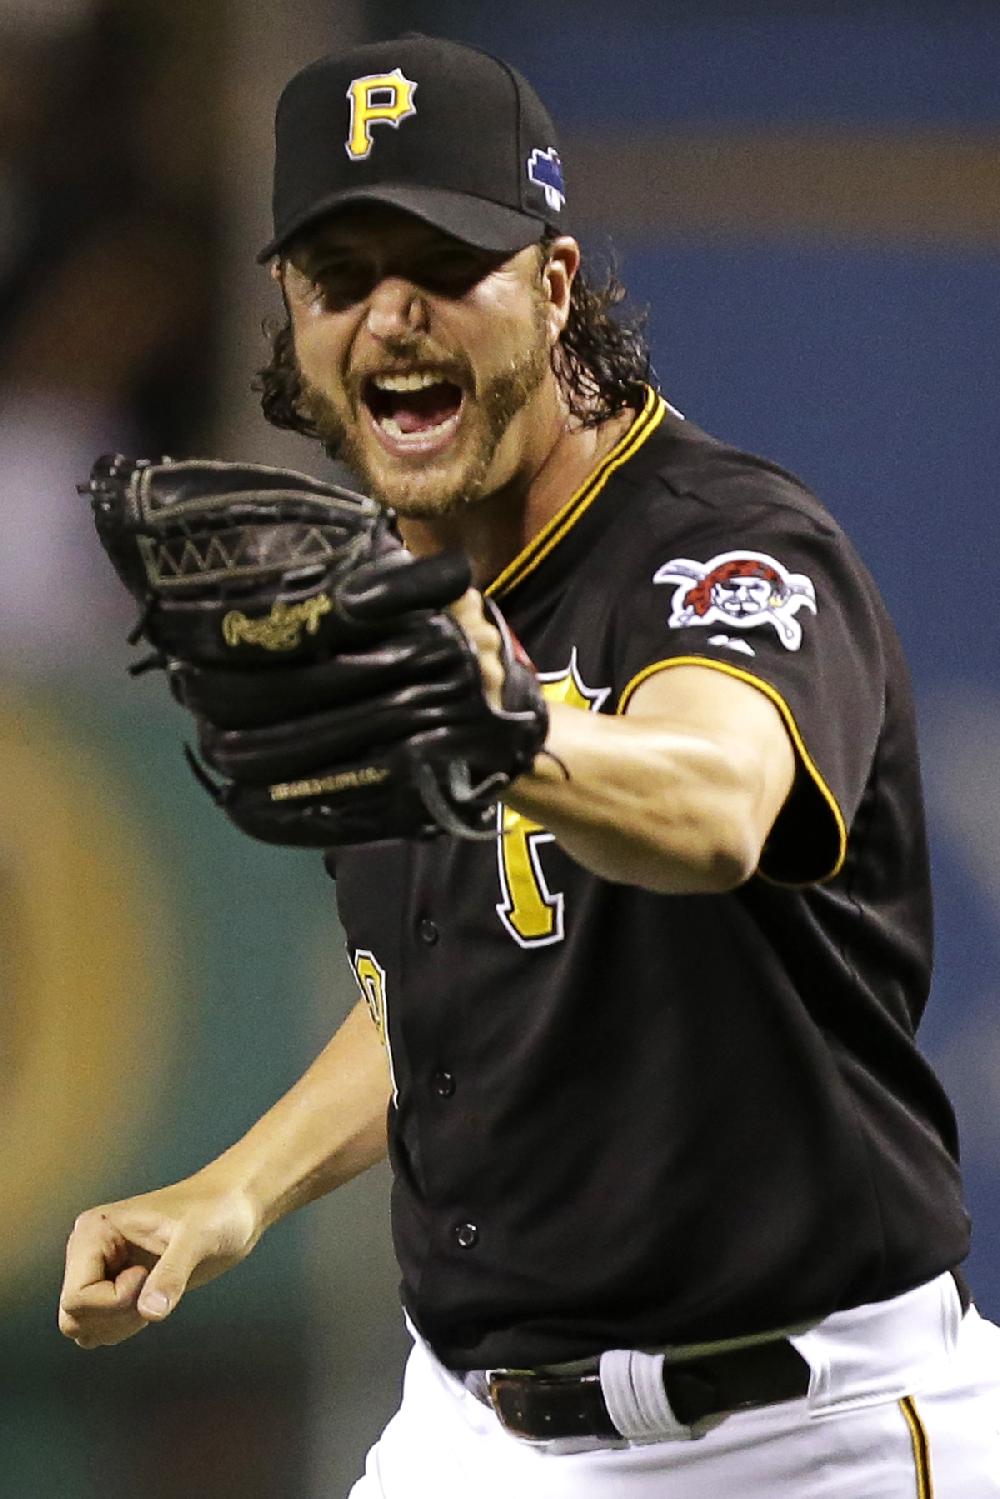 Pittsburgh pirates jolly roger celebrating a baseball victory